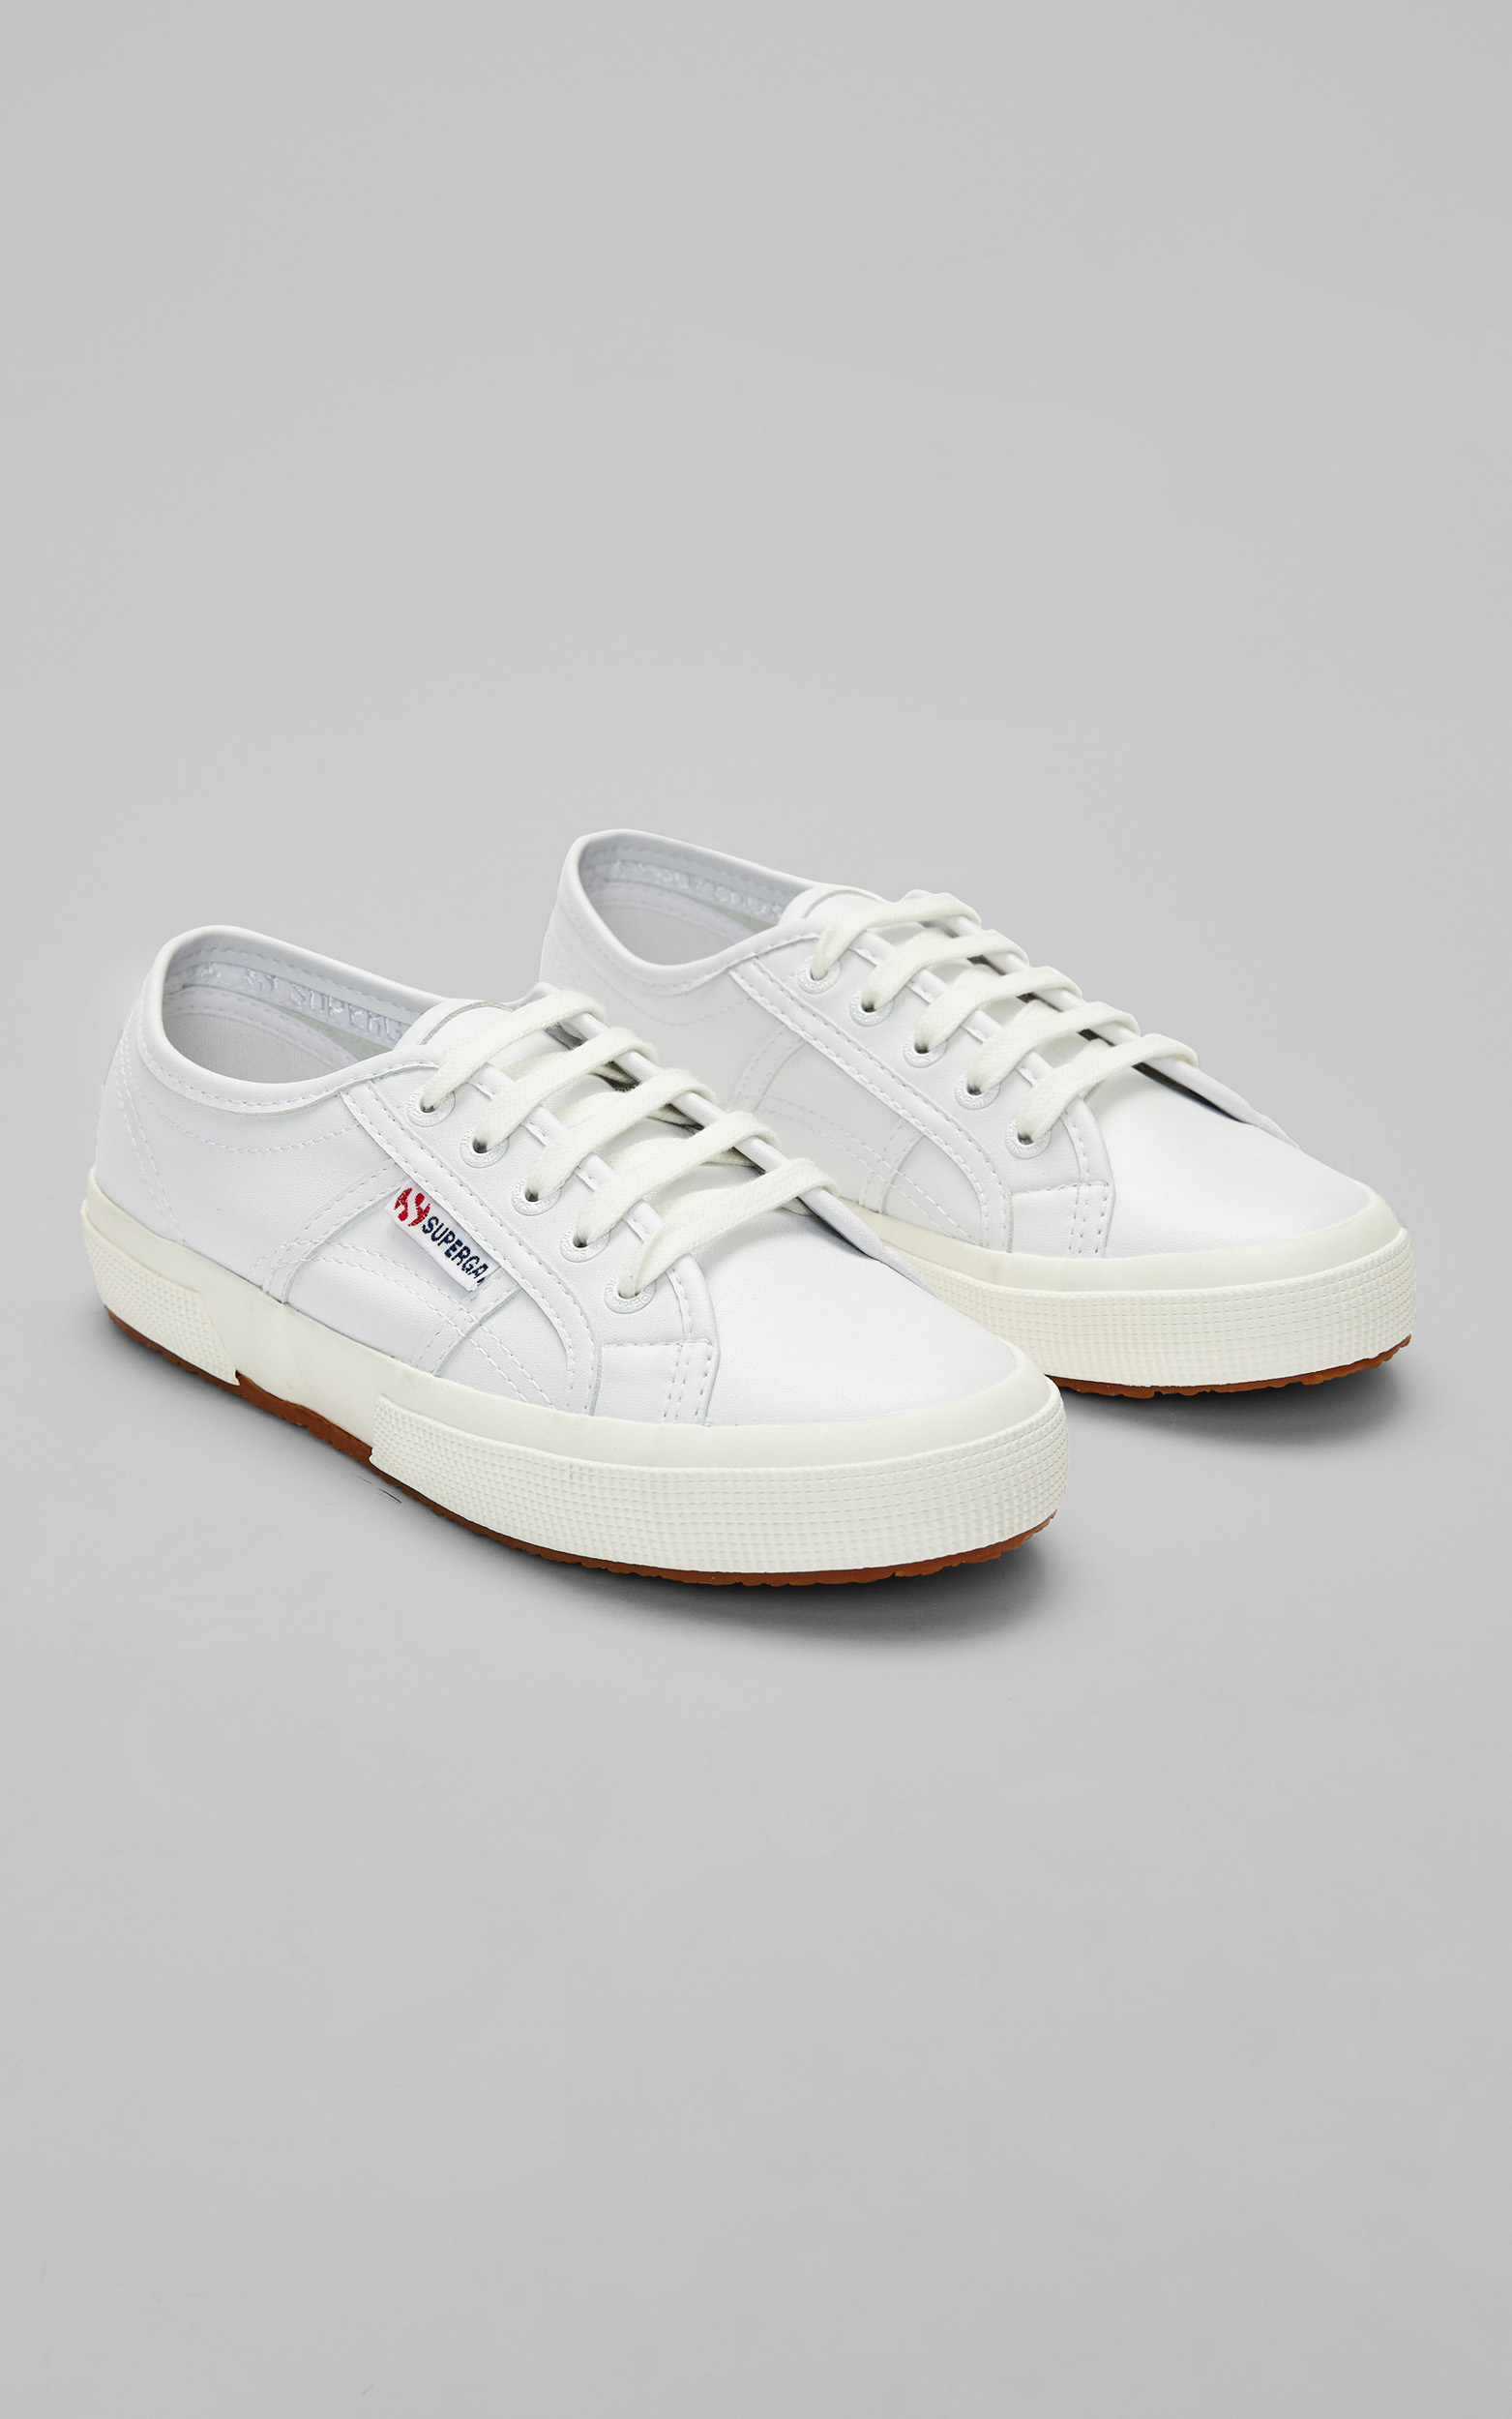 Superga - 2750 Vegan Leather Sneakers in White-White Avorio - 05, WHT1, hi-res image number null